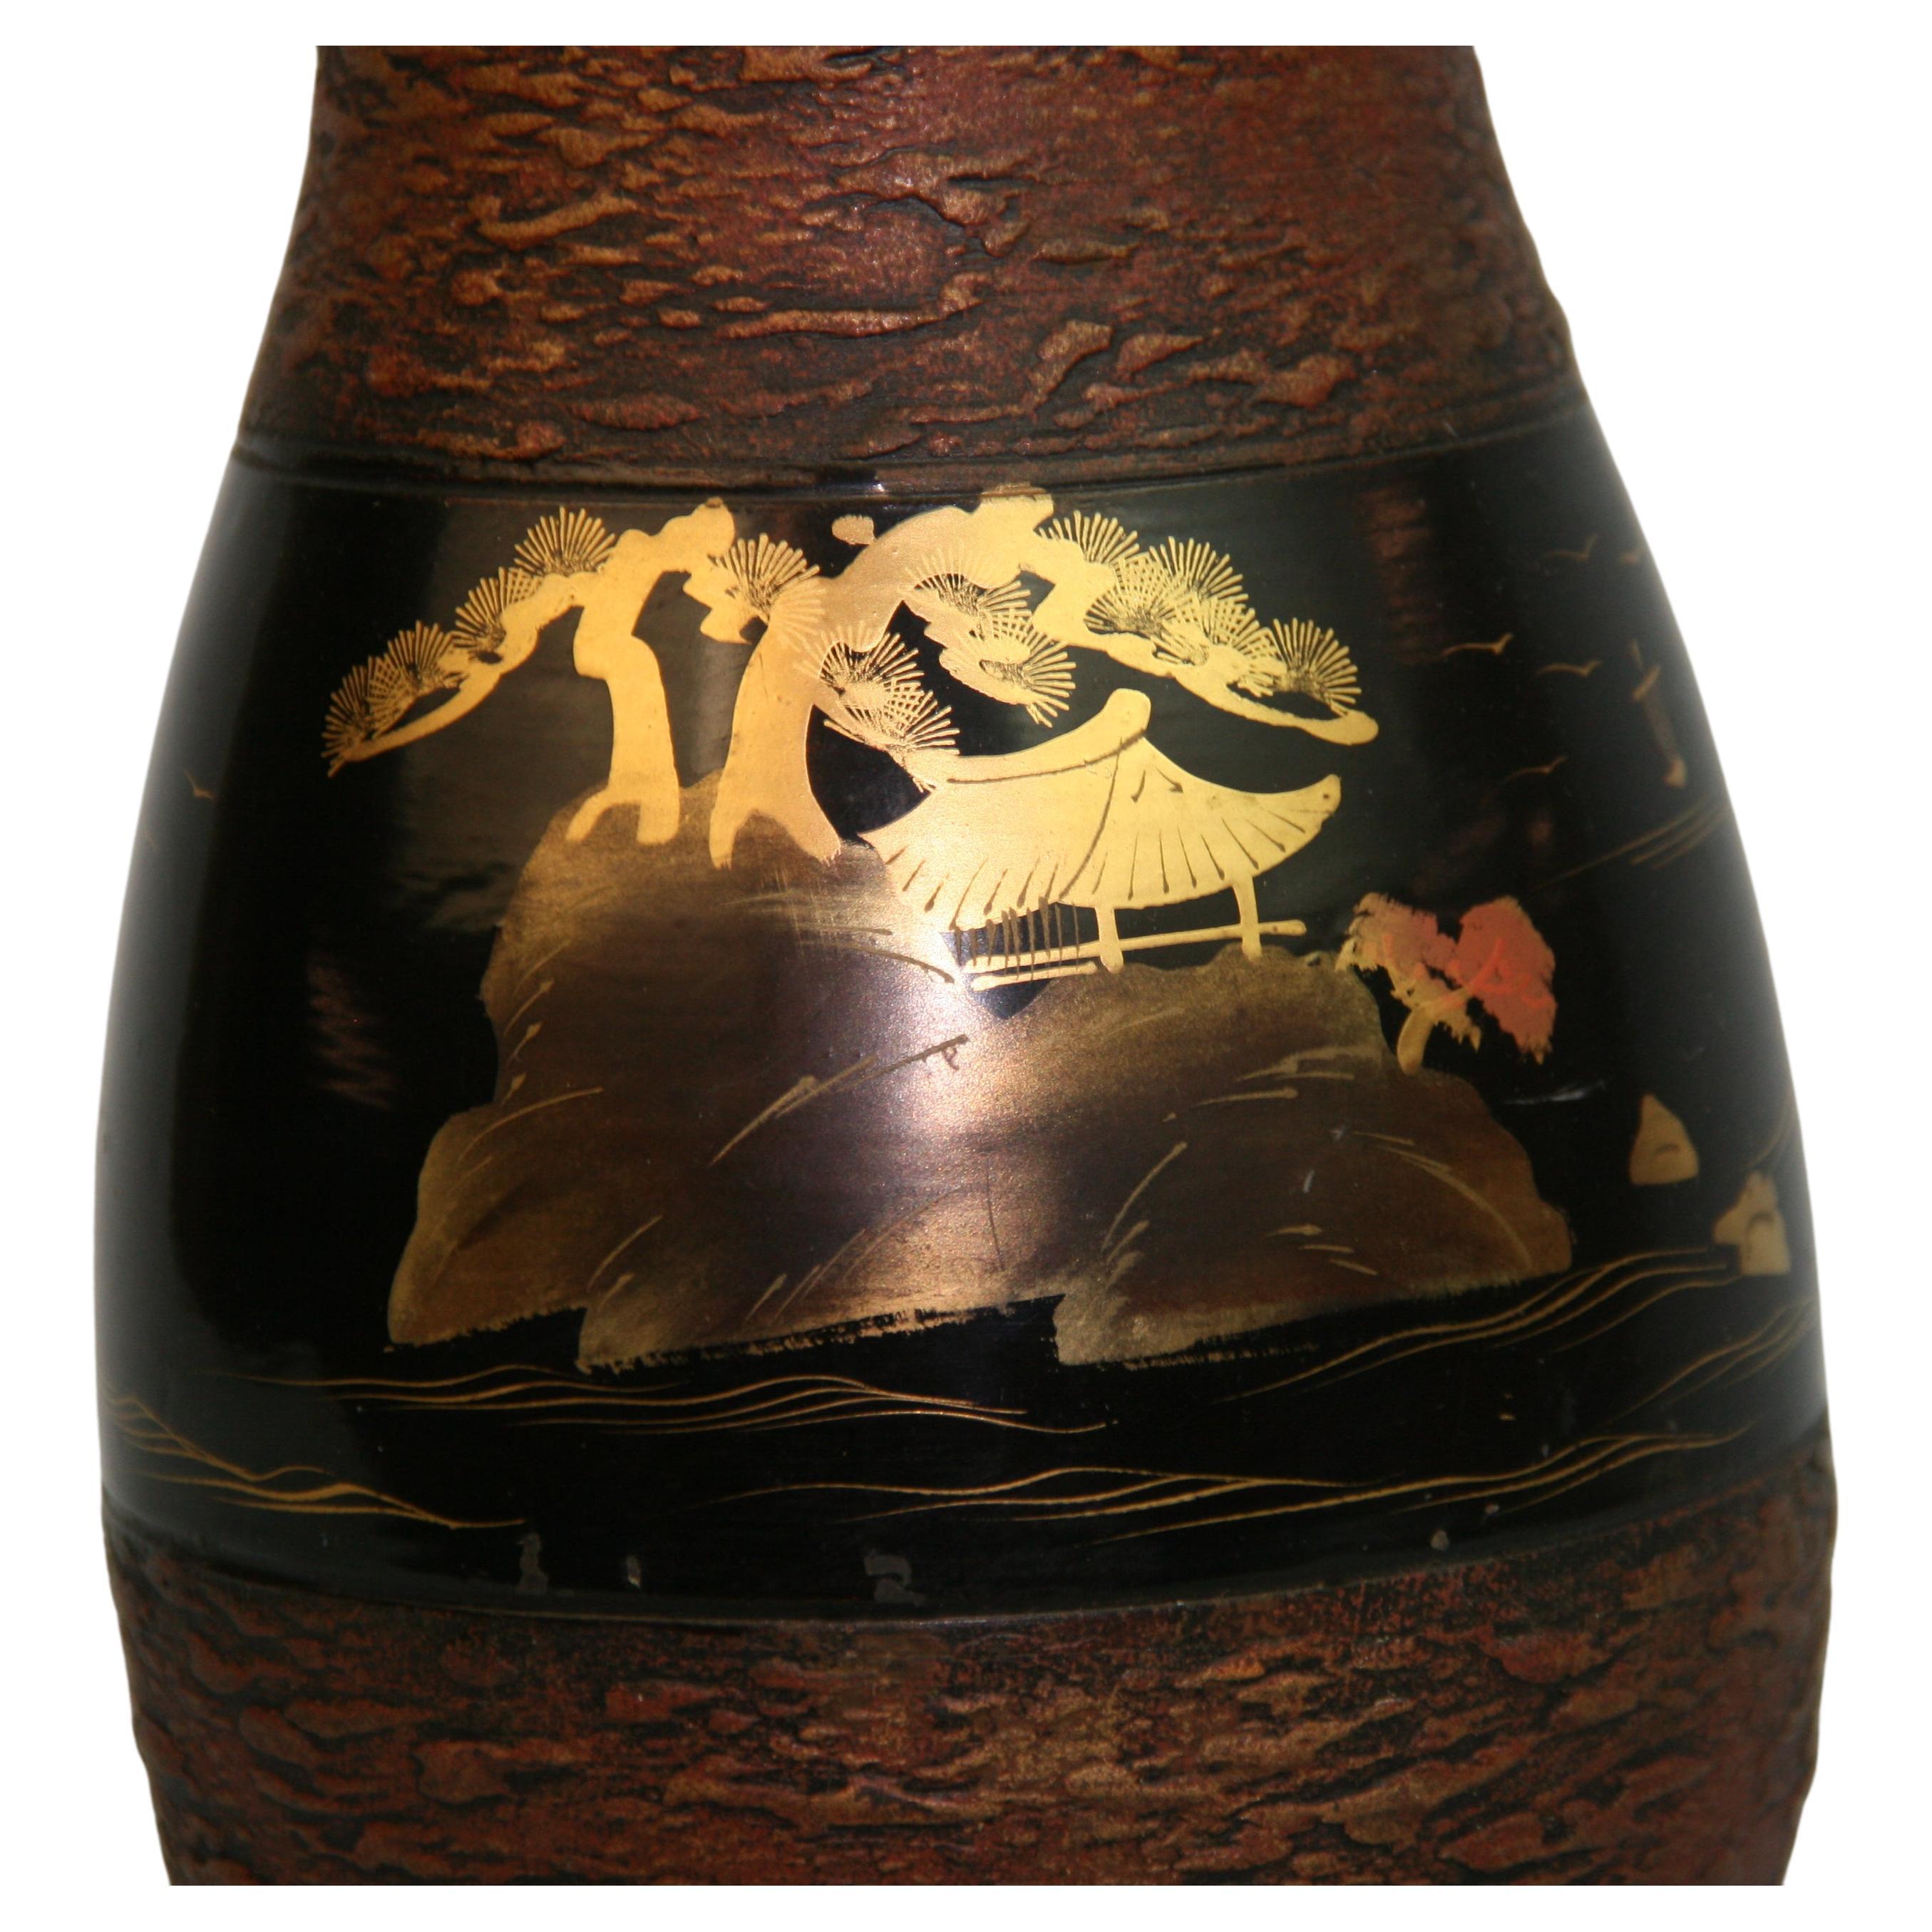 Japanese hand painted vase.